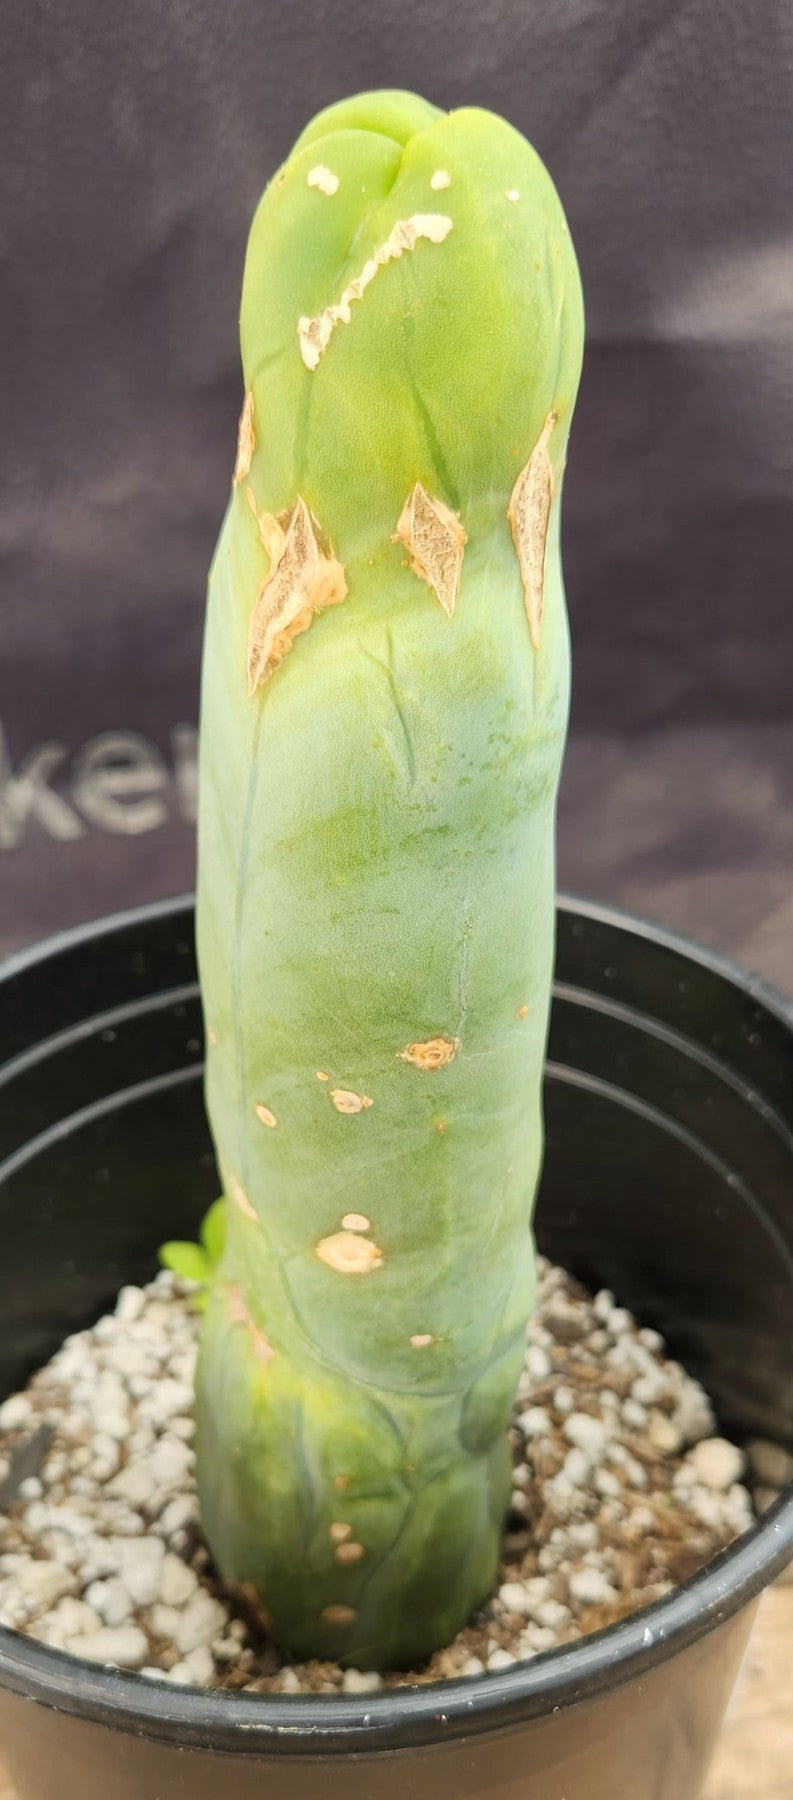 #EC21 EXACT Trichocereus Bridgesii Monstrose TBM Long Form penis Cactus 9”-Cactus - Large - Exact-The Succulent Source